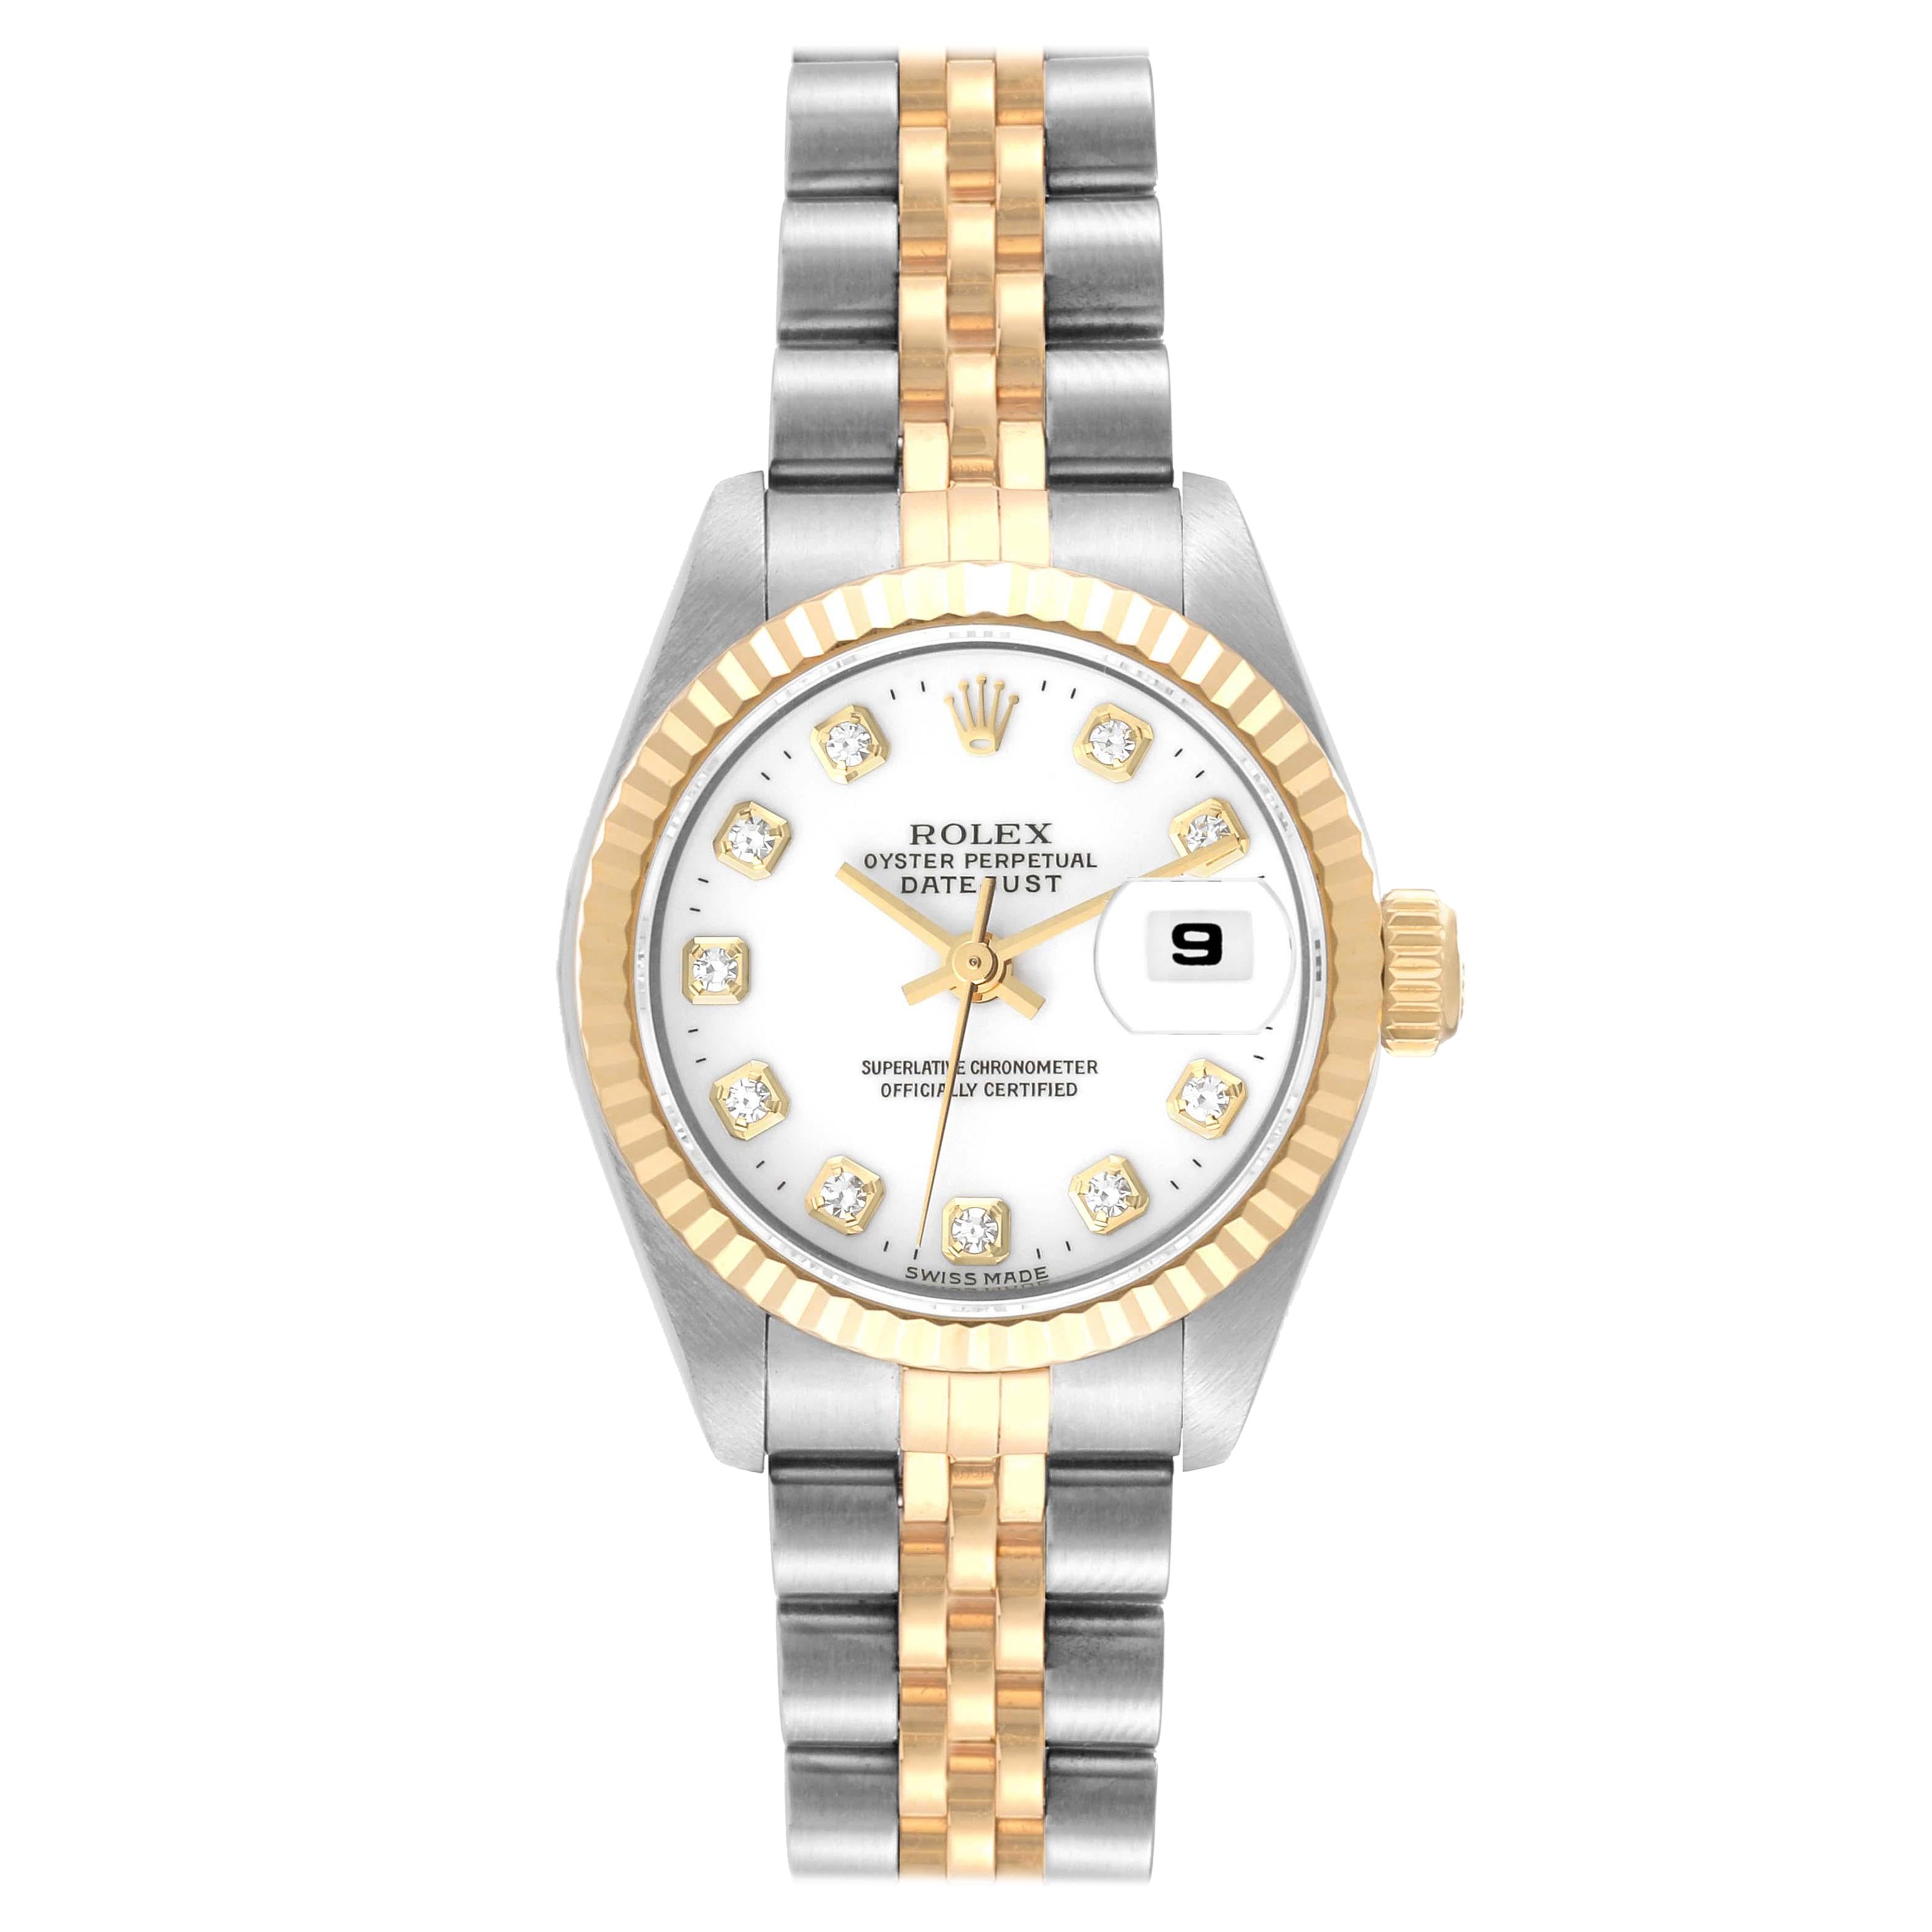 Rolex Datejust White Diamond Dial Steel Yellow Gold Ladies Watch 69173